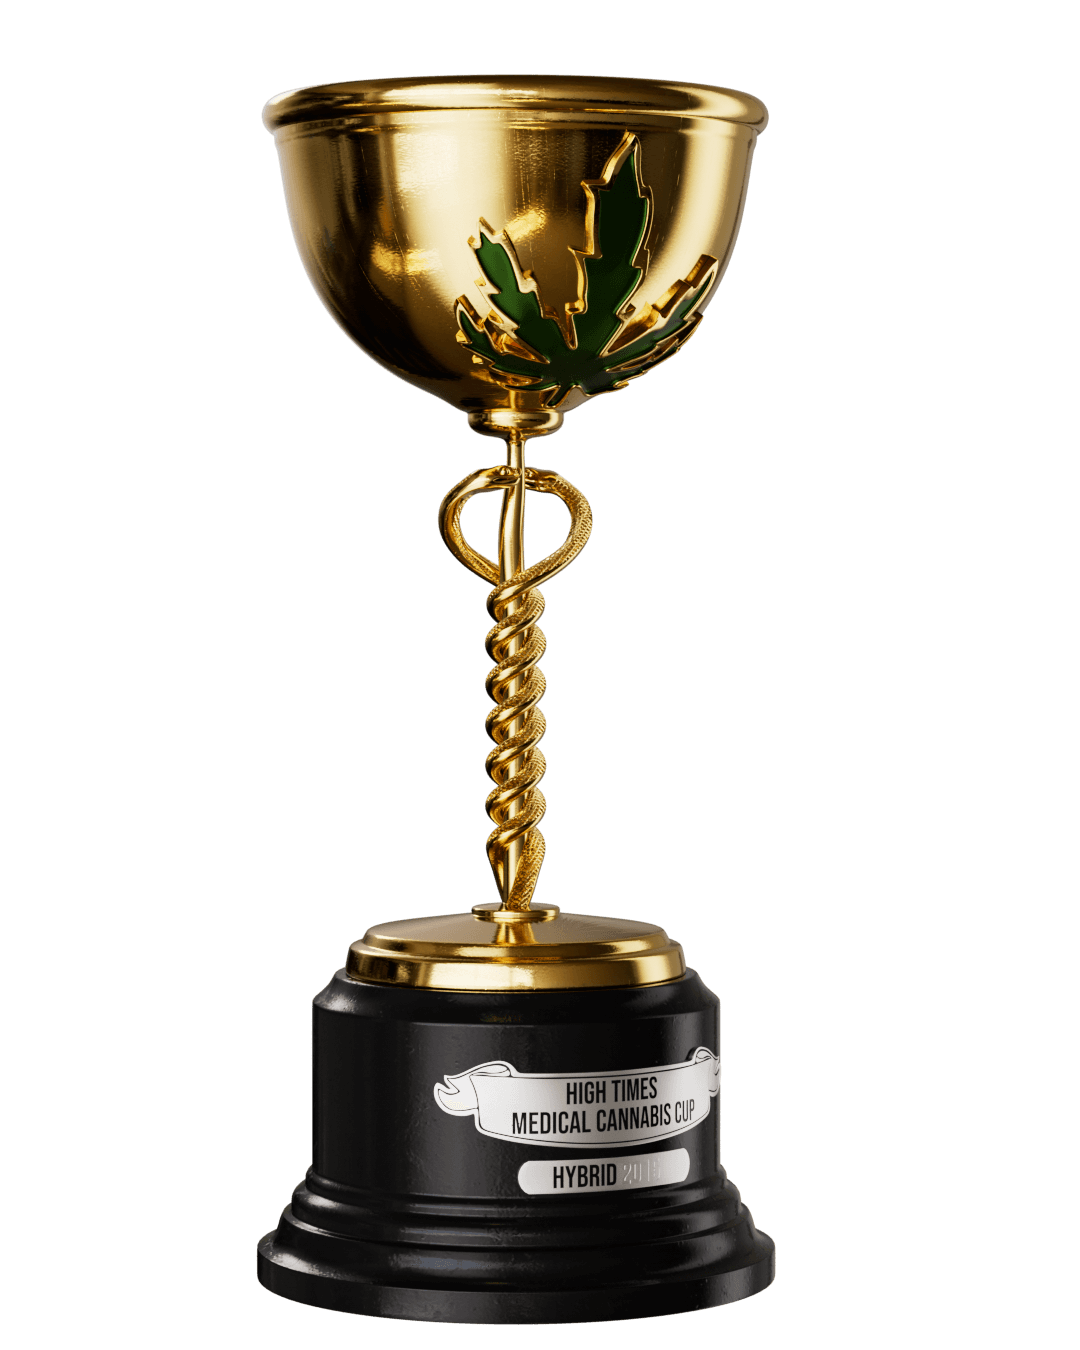 High Times Medical Cannabis Cup Hybrid 2015 Trophy